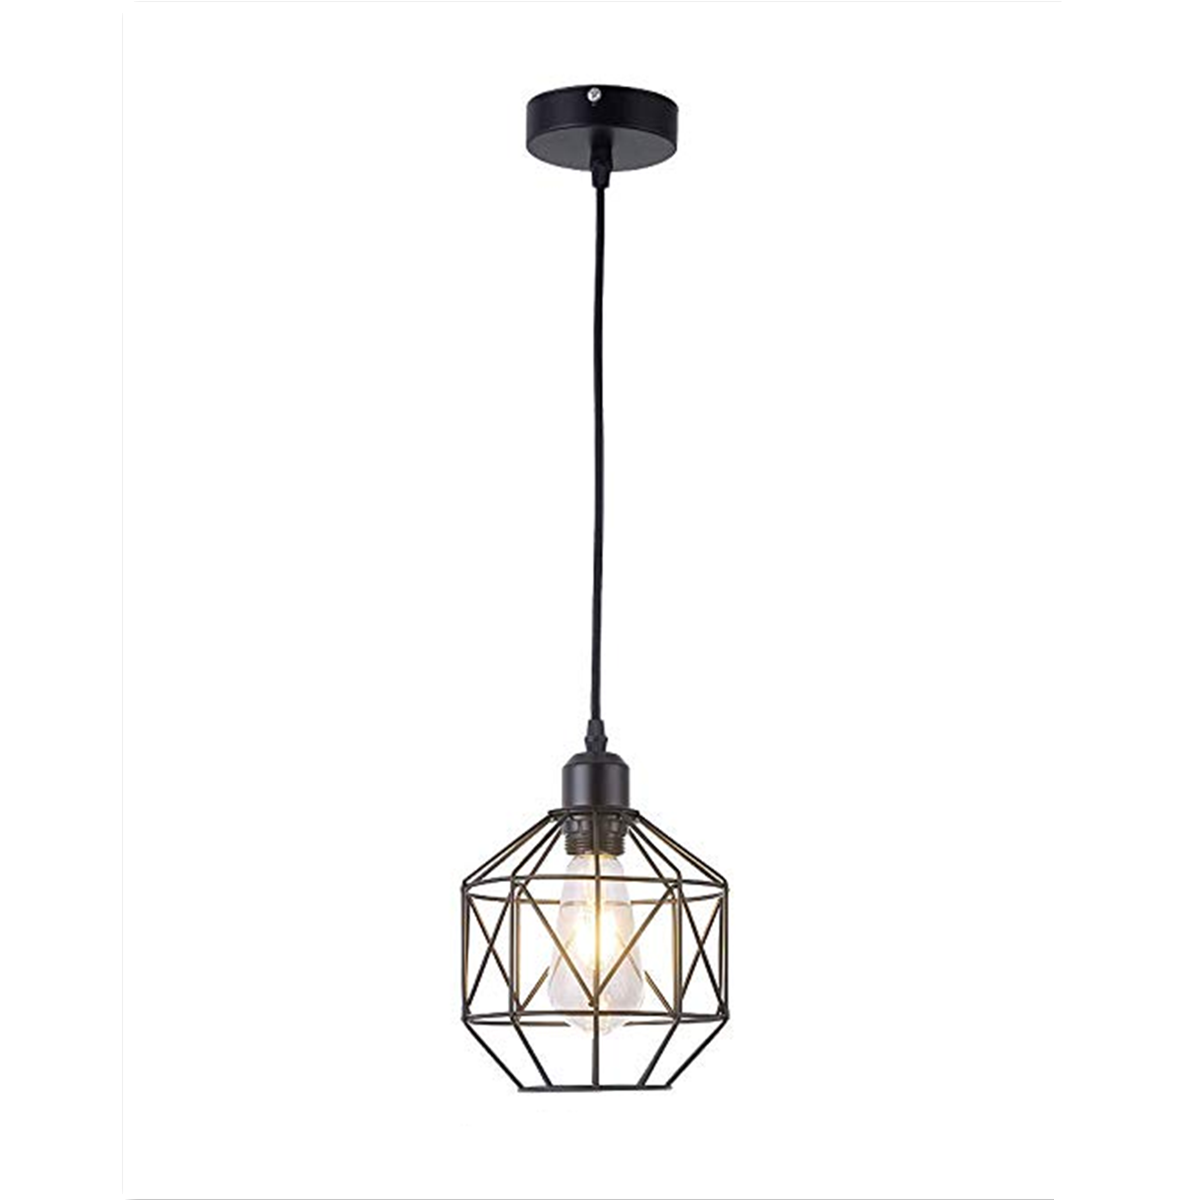 Modern-Home-Metal-Pendant-Lamp-Industrial-Hanging-Light-Fixture-Ceiling-Lamp-1841326-5